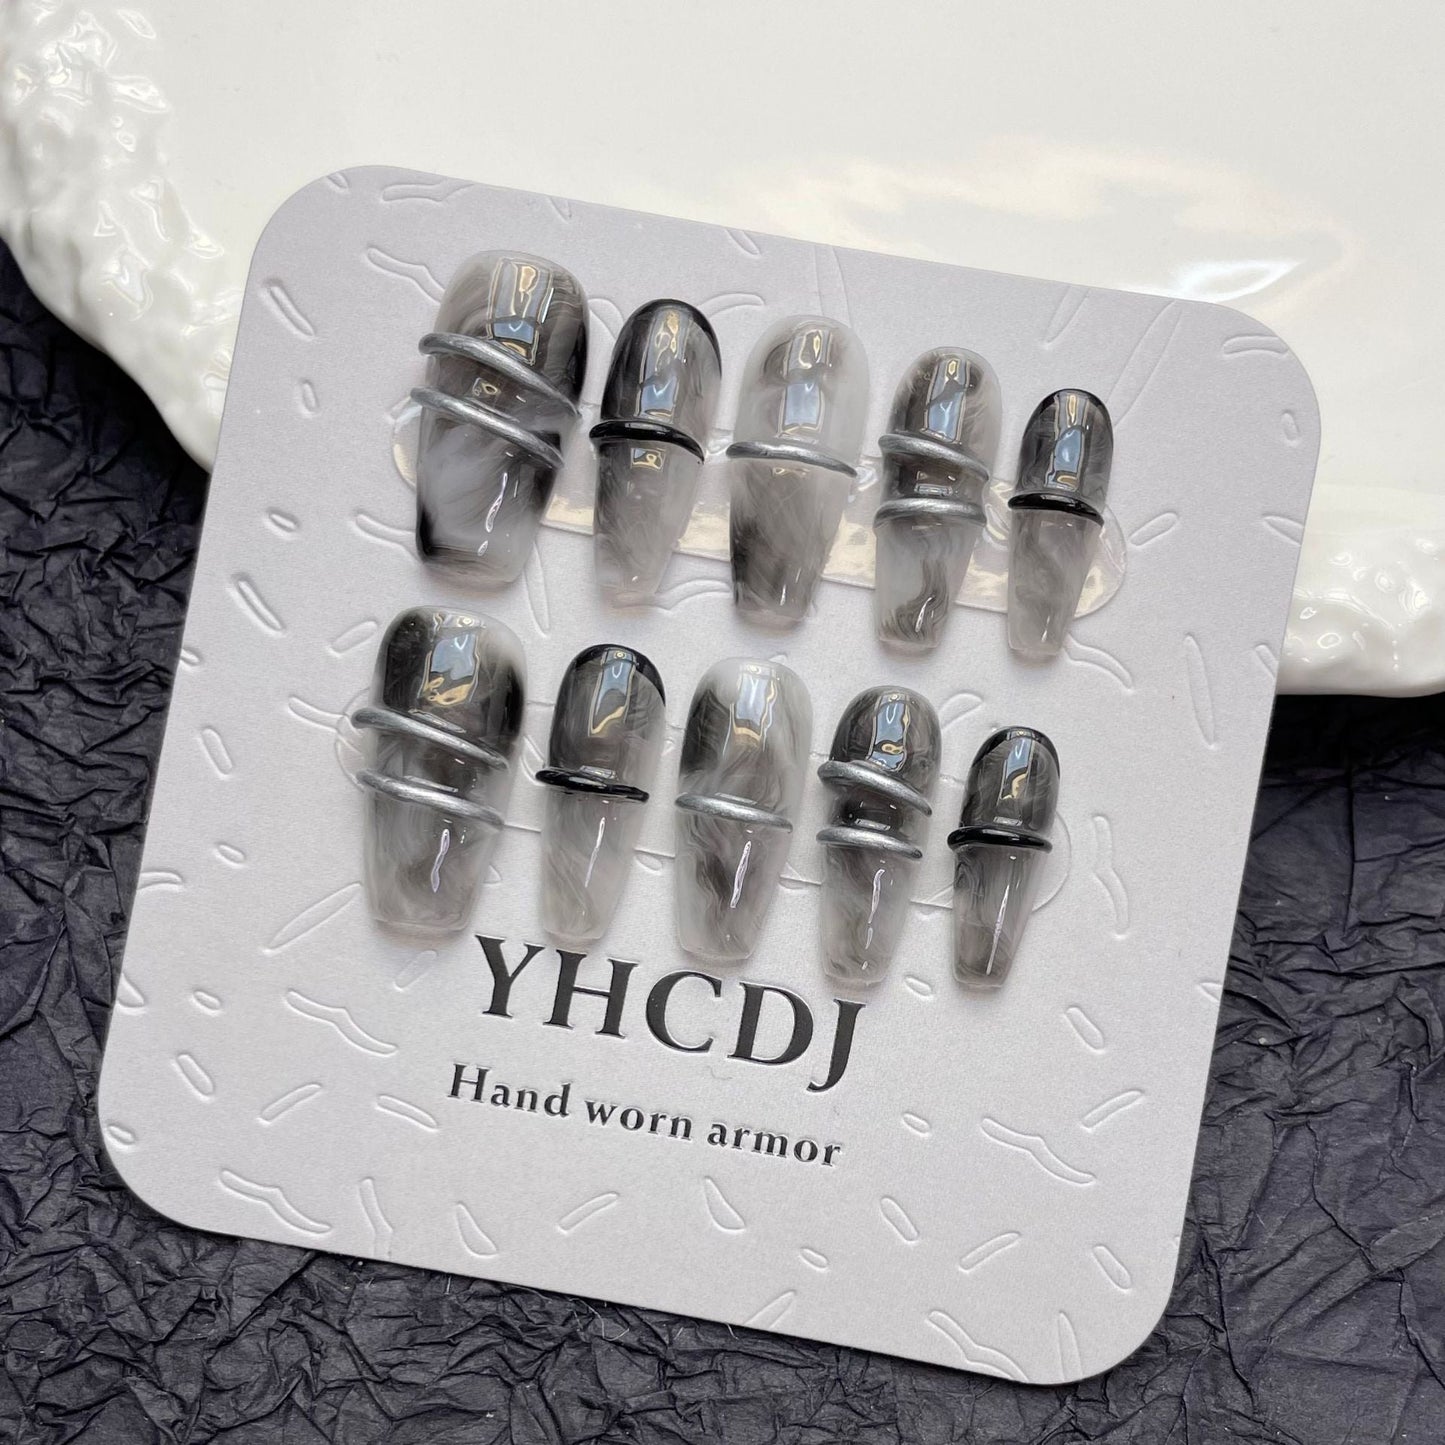 953 Dark Gothic style press on nails 100% handmade false nails gray black